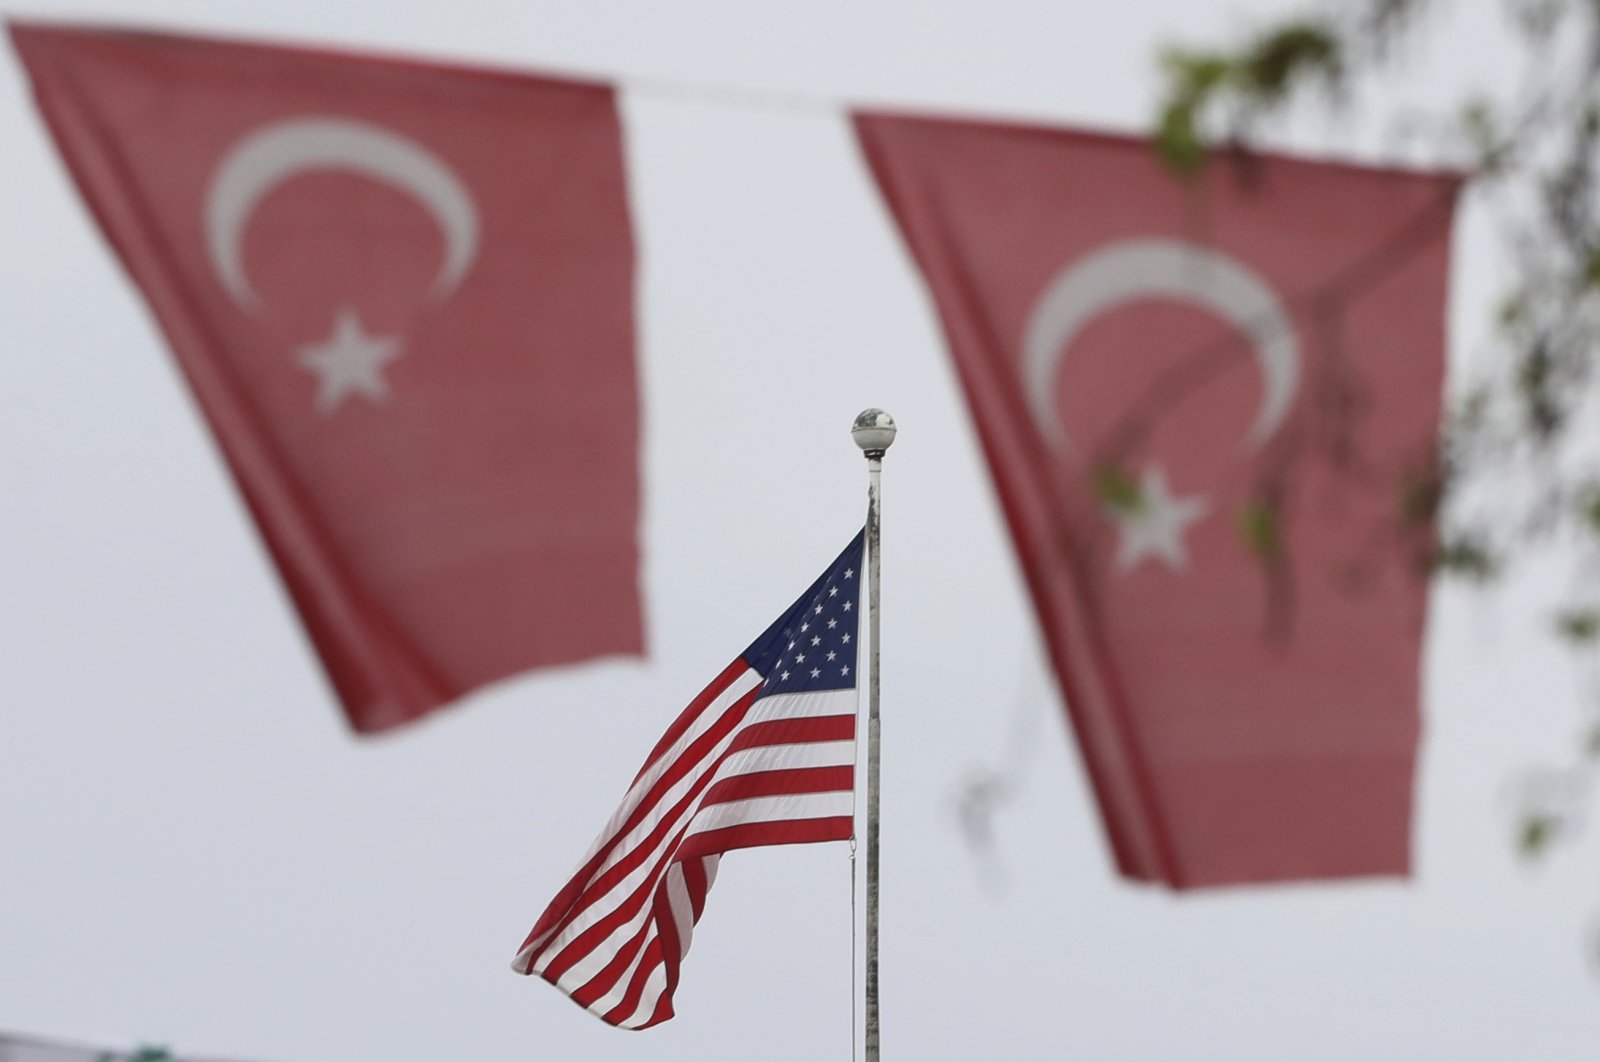 Turkish flags decorate a street outside the U.S. Embassy in Ankara, Turkey, April 25, 2021. (AP Photo)